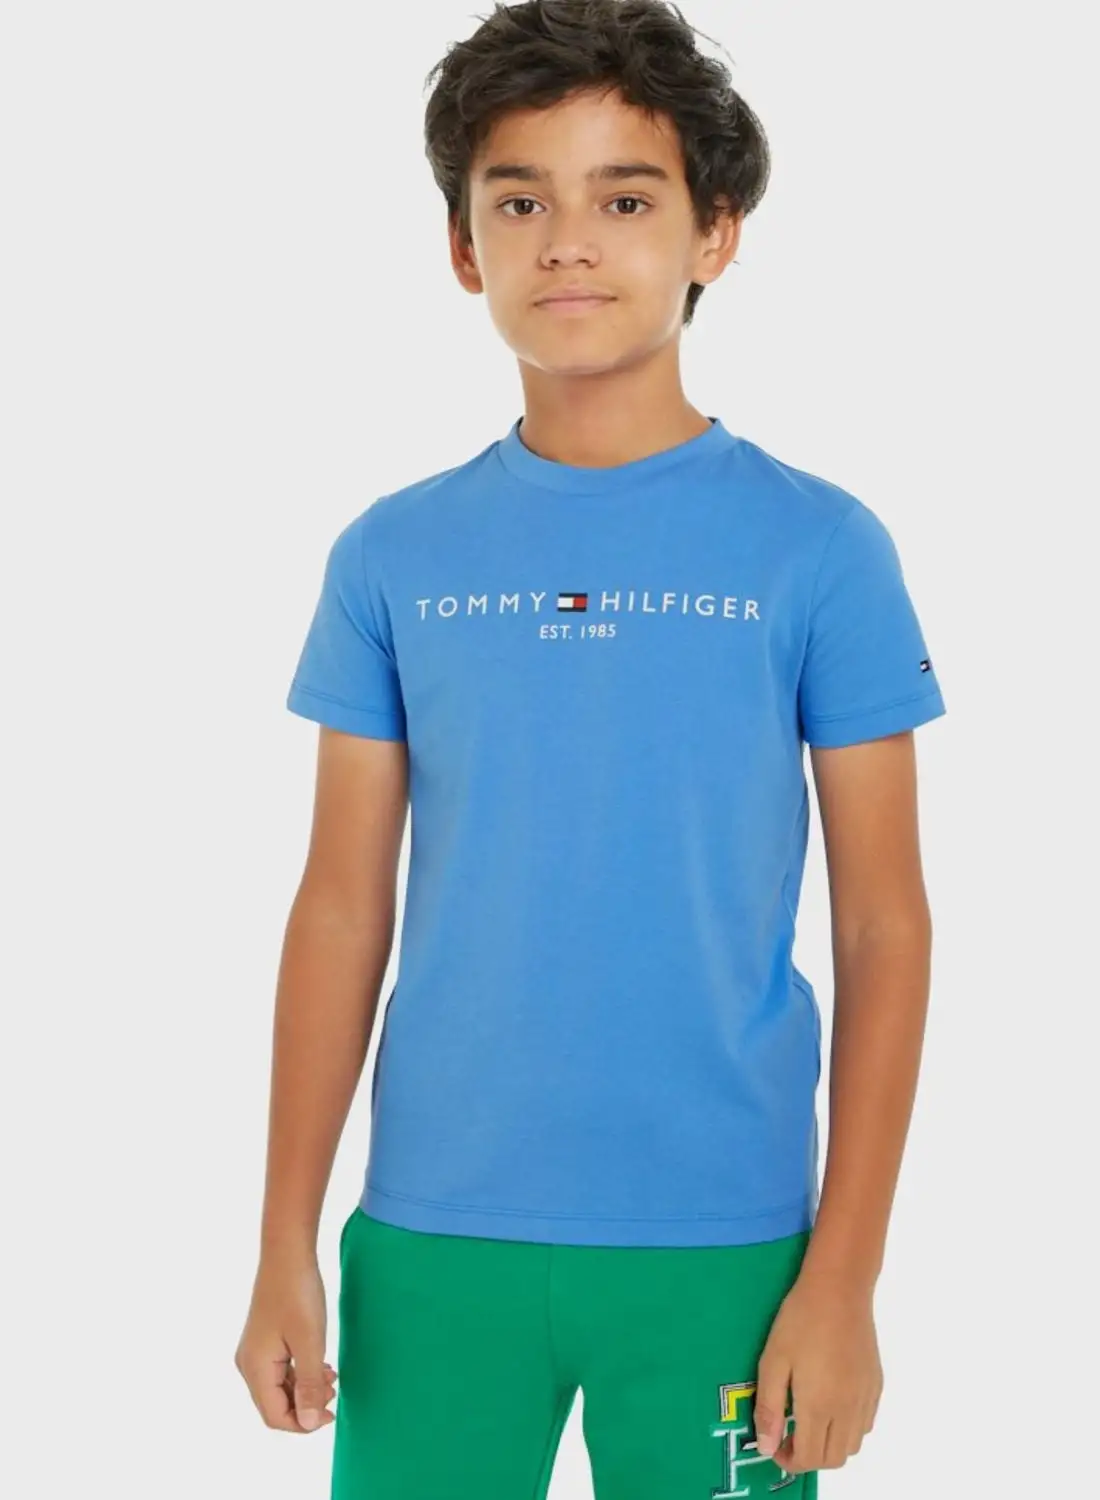 TOMMY HILFIGER Youth Logo T-Shirt